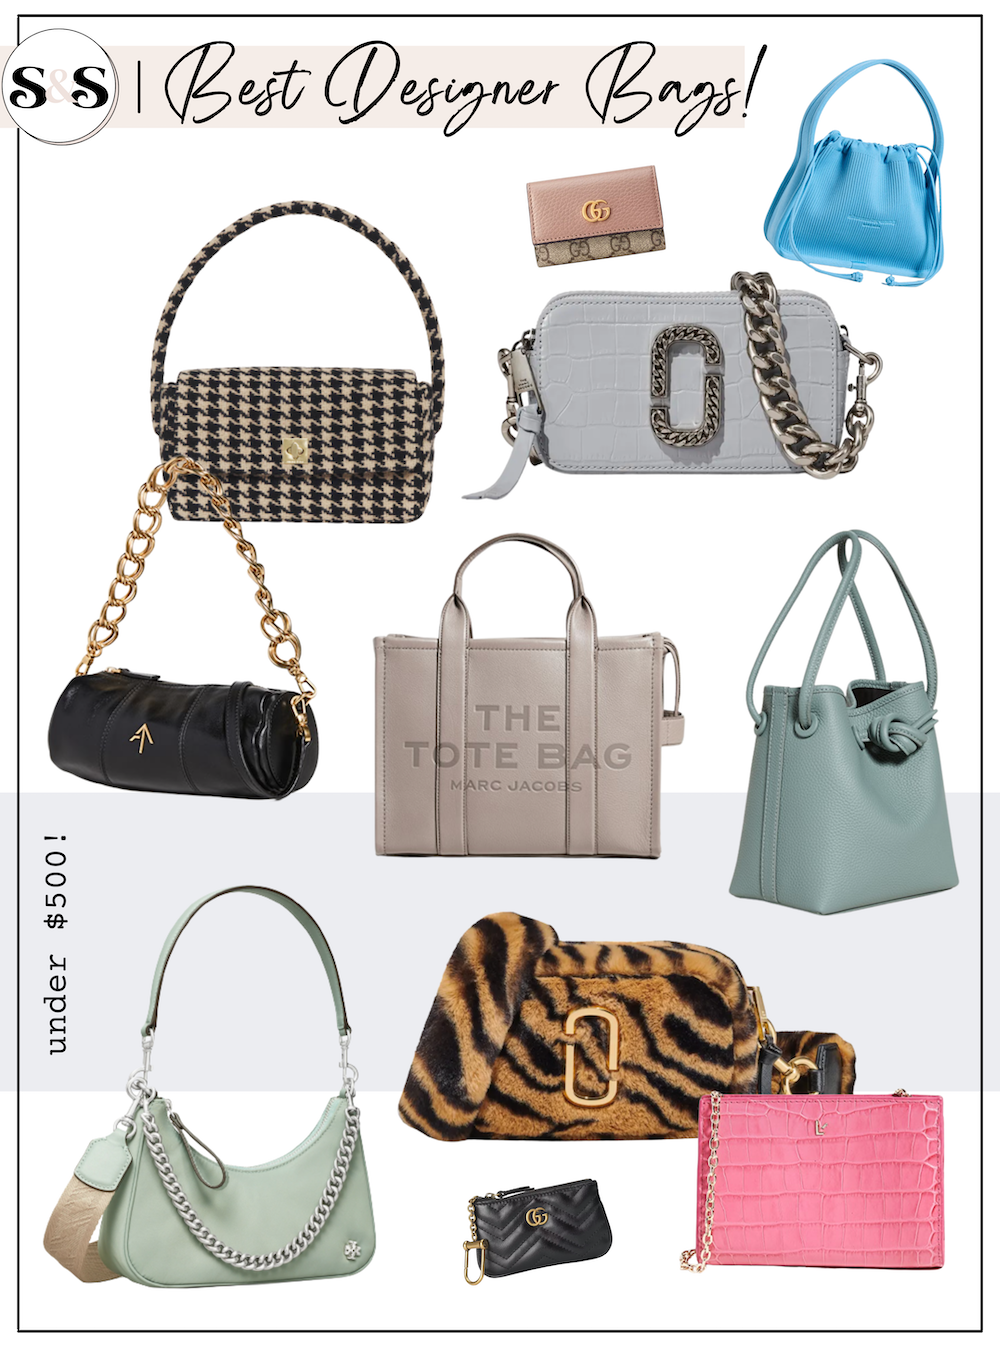 Designer Bags Under $500, Luxury Bags